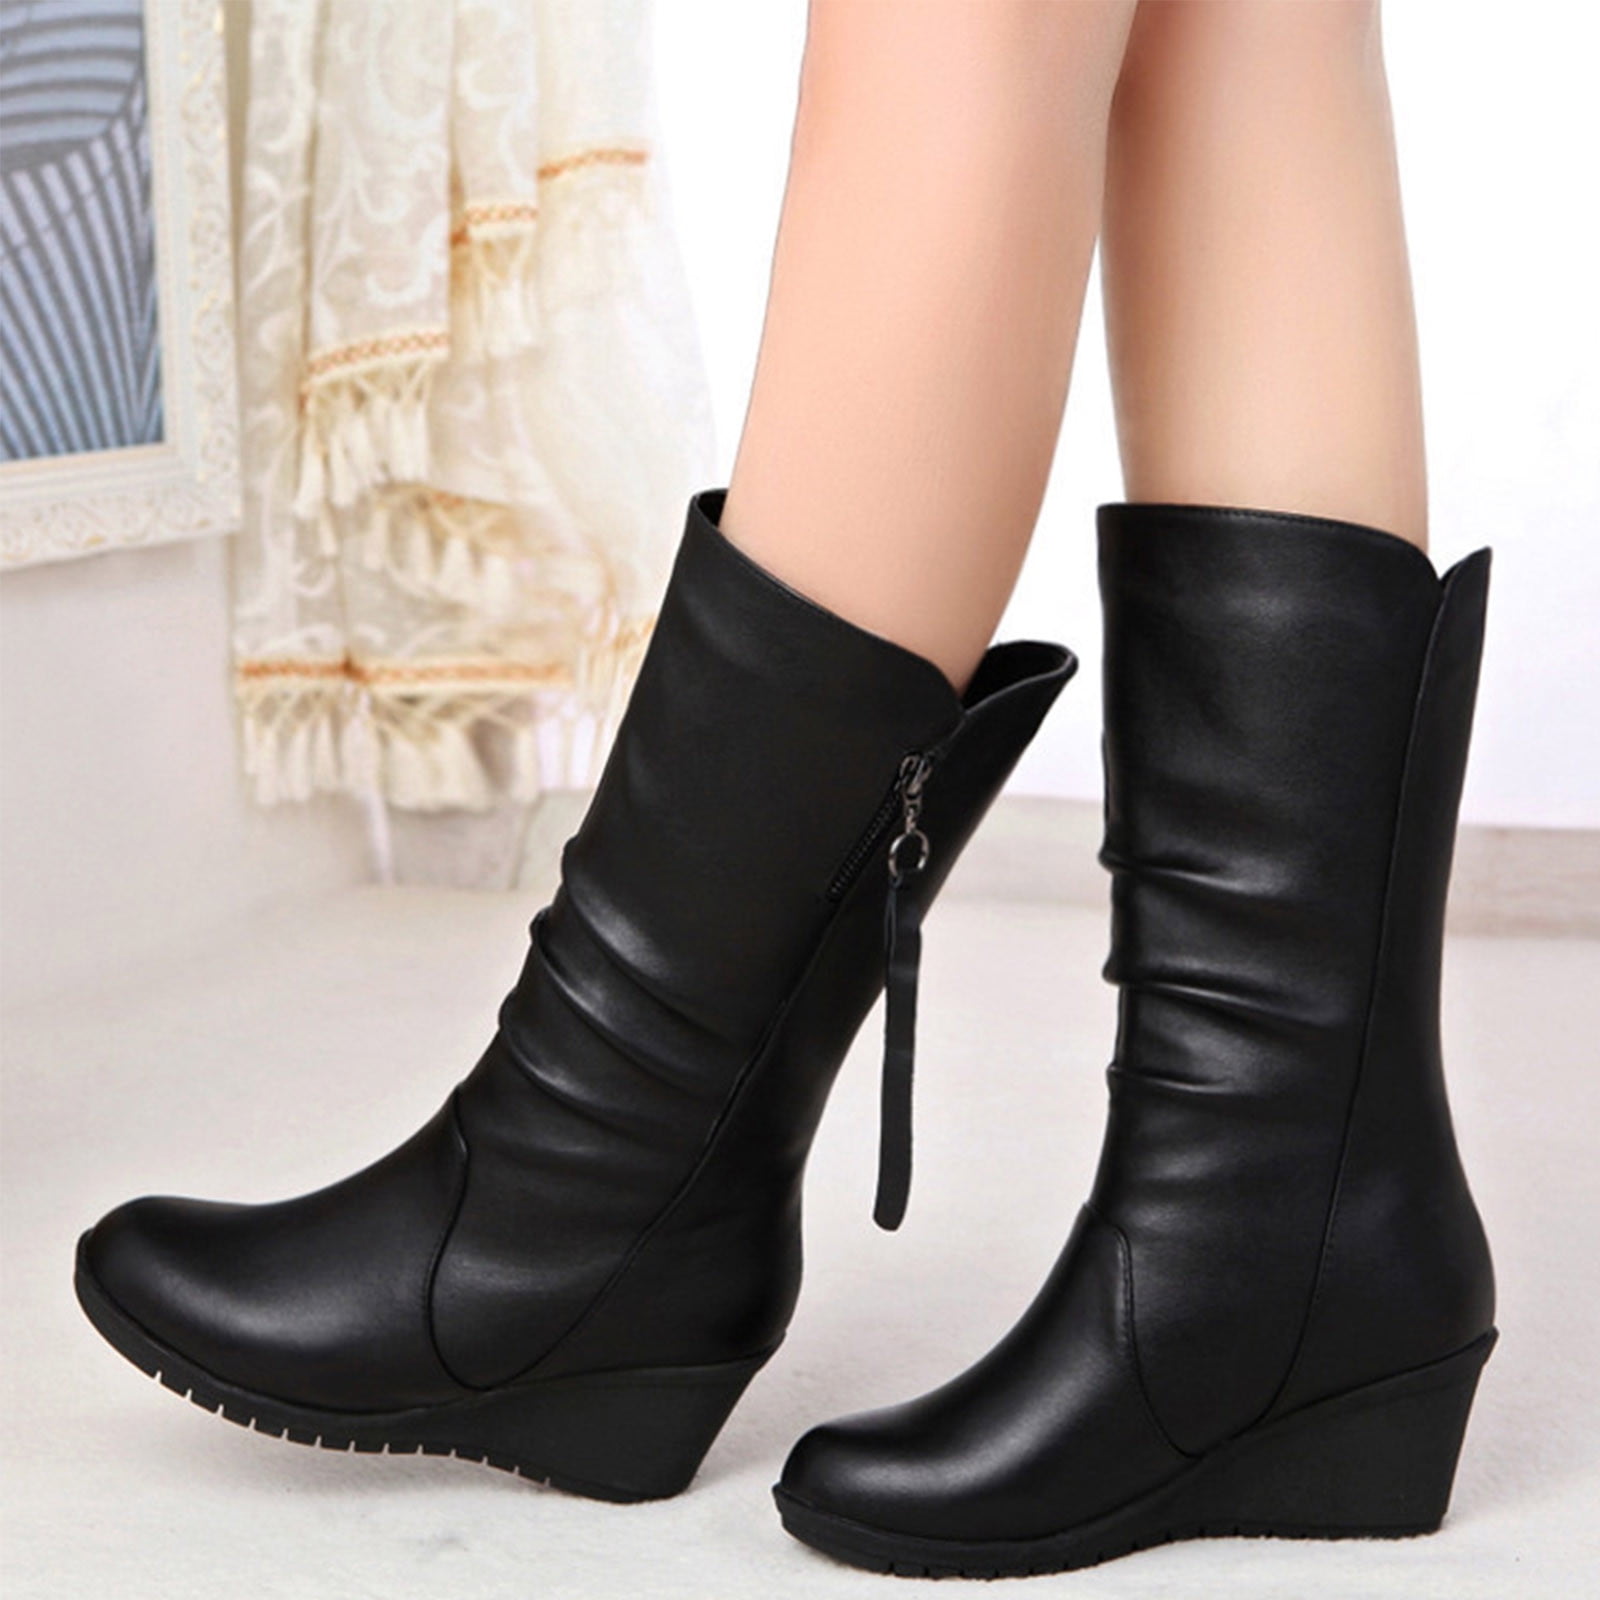 Women's High Heel Boots, High Heel Leather Boots